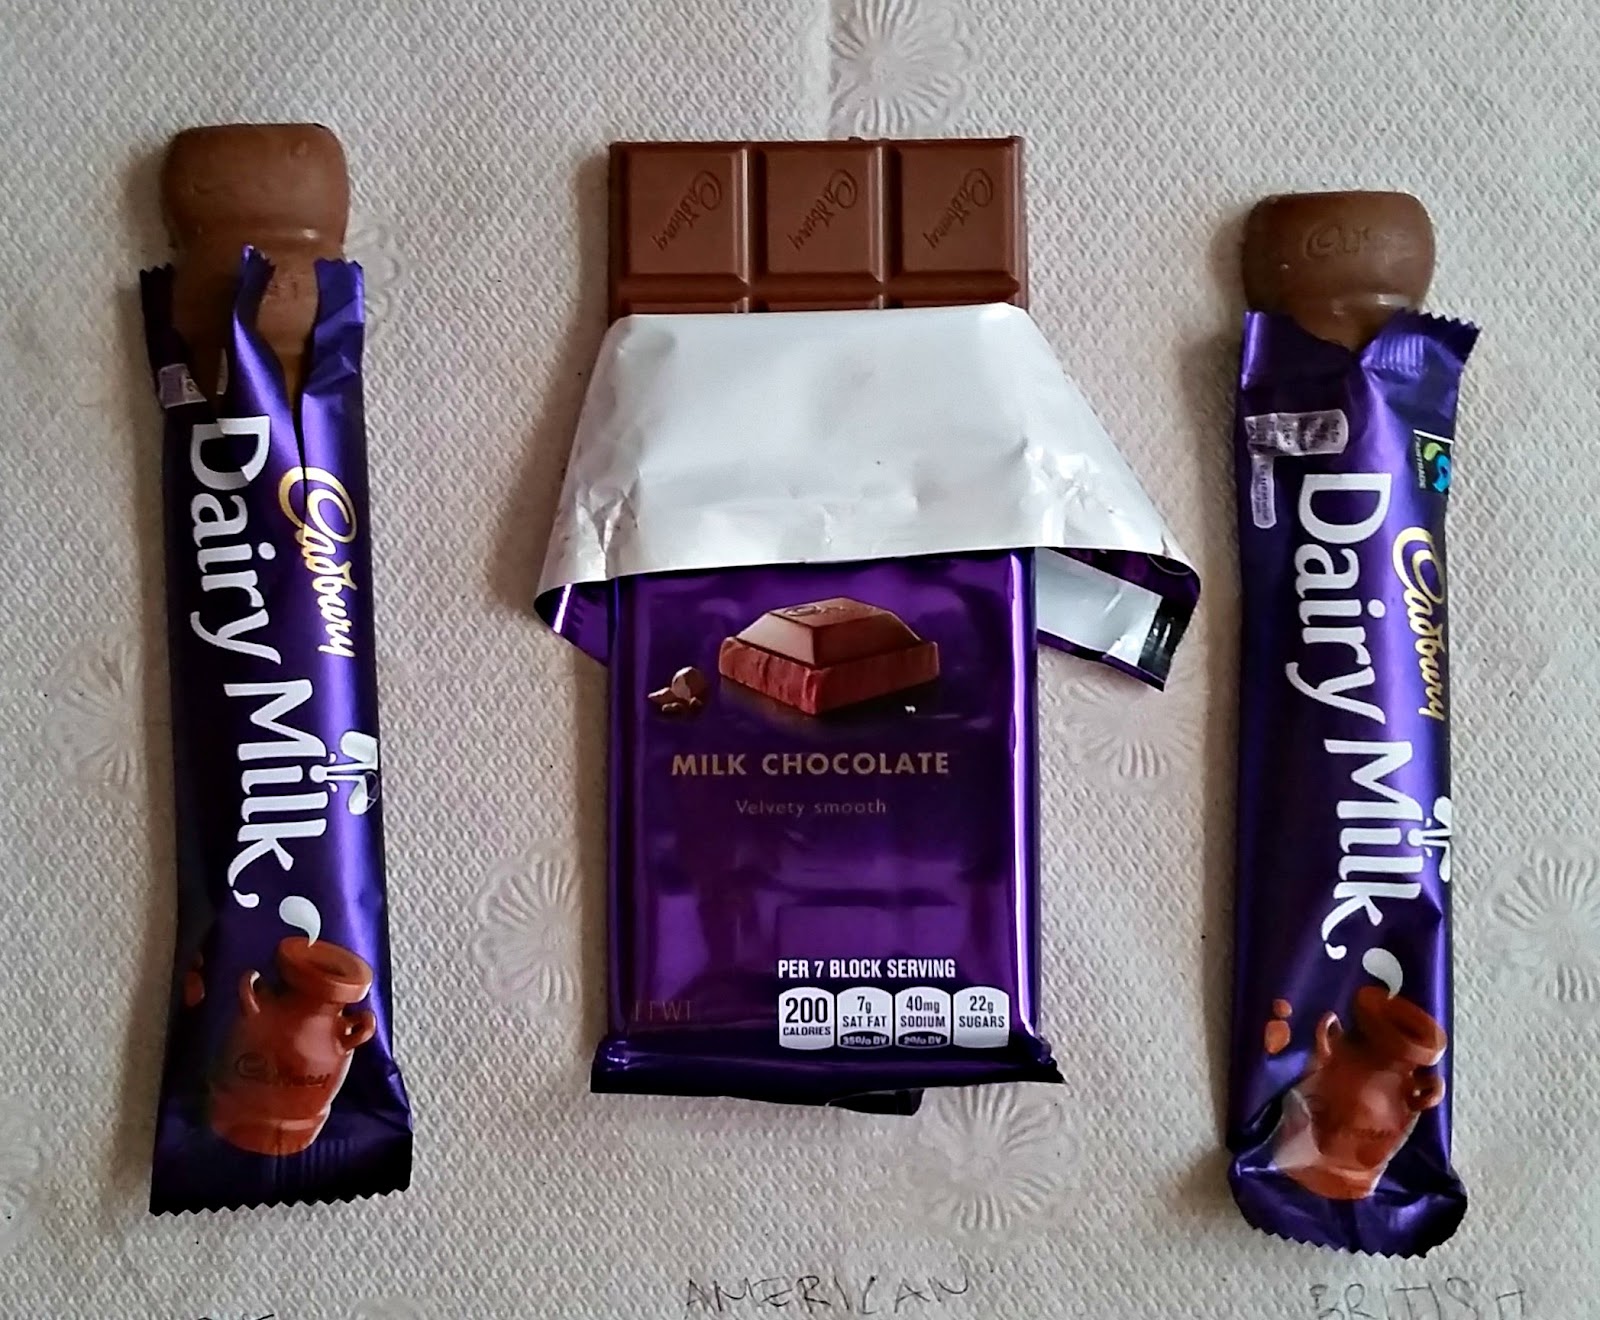 Photos: I Compared US and UK Cadbury Dairy Milk Bars